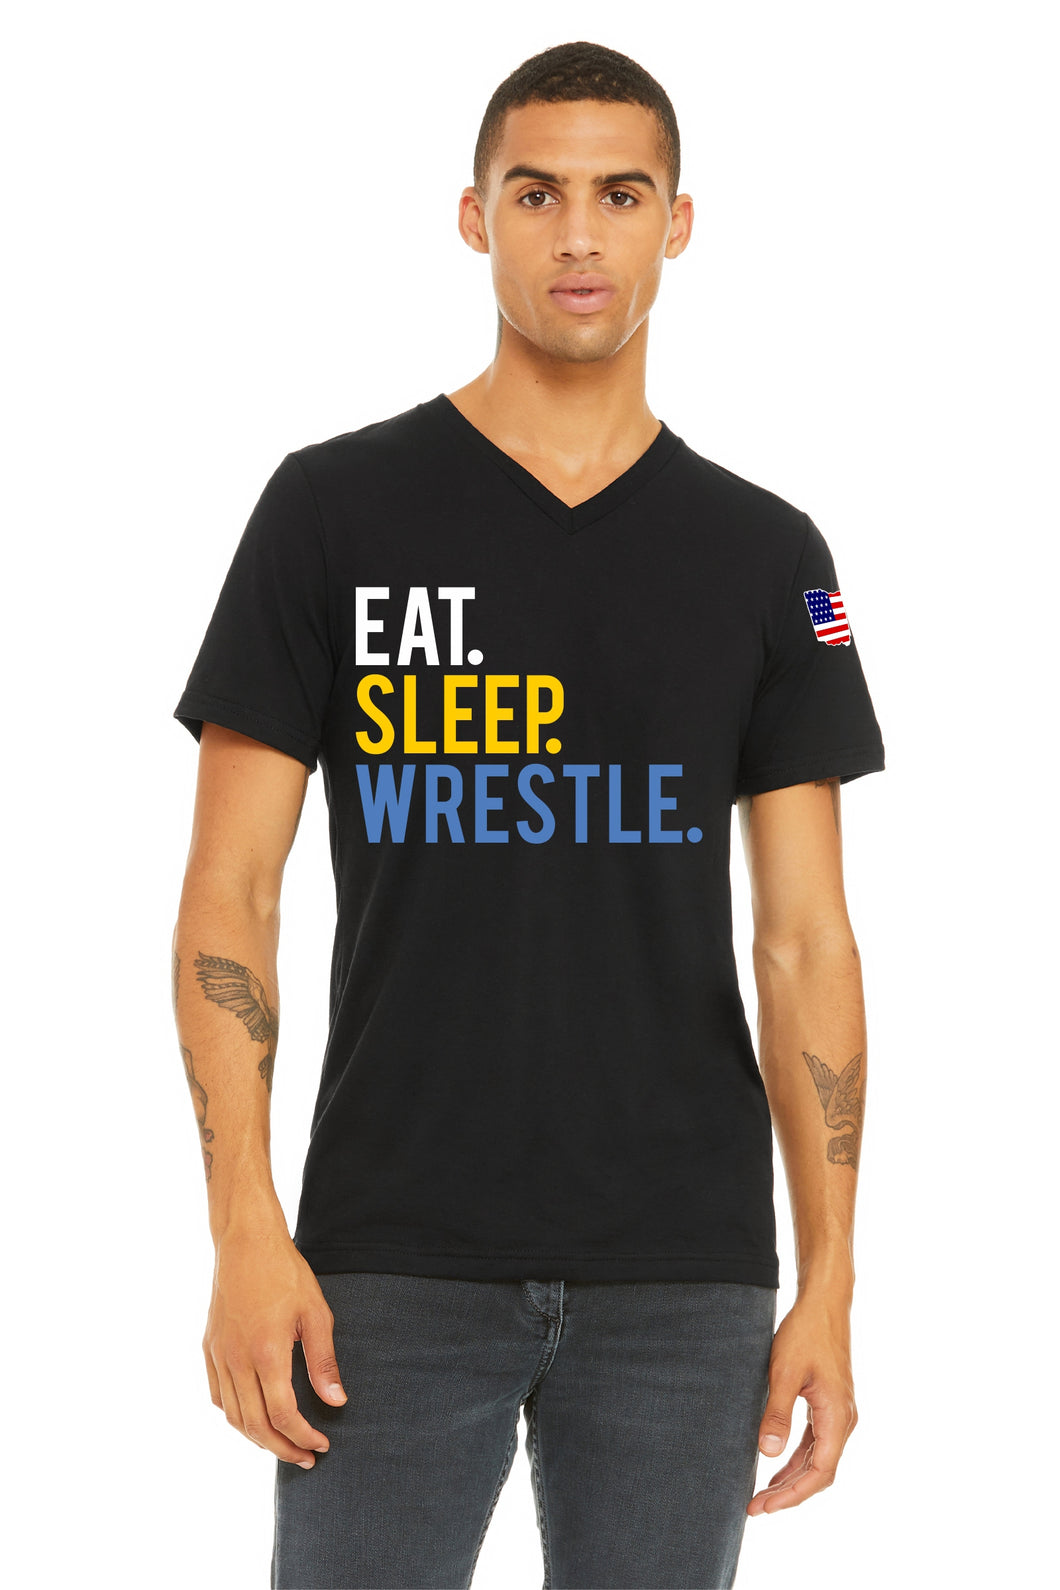 Eat Sleep Wrestle Vneck Unisex